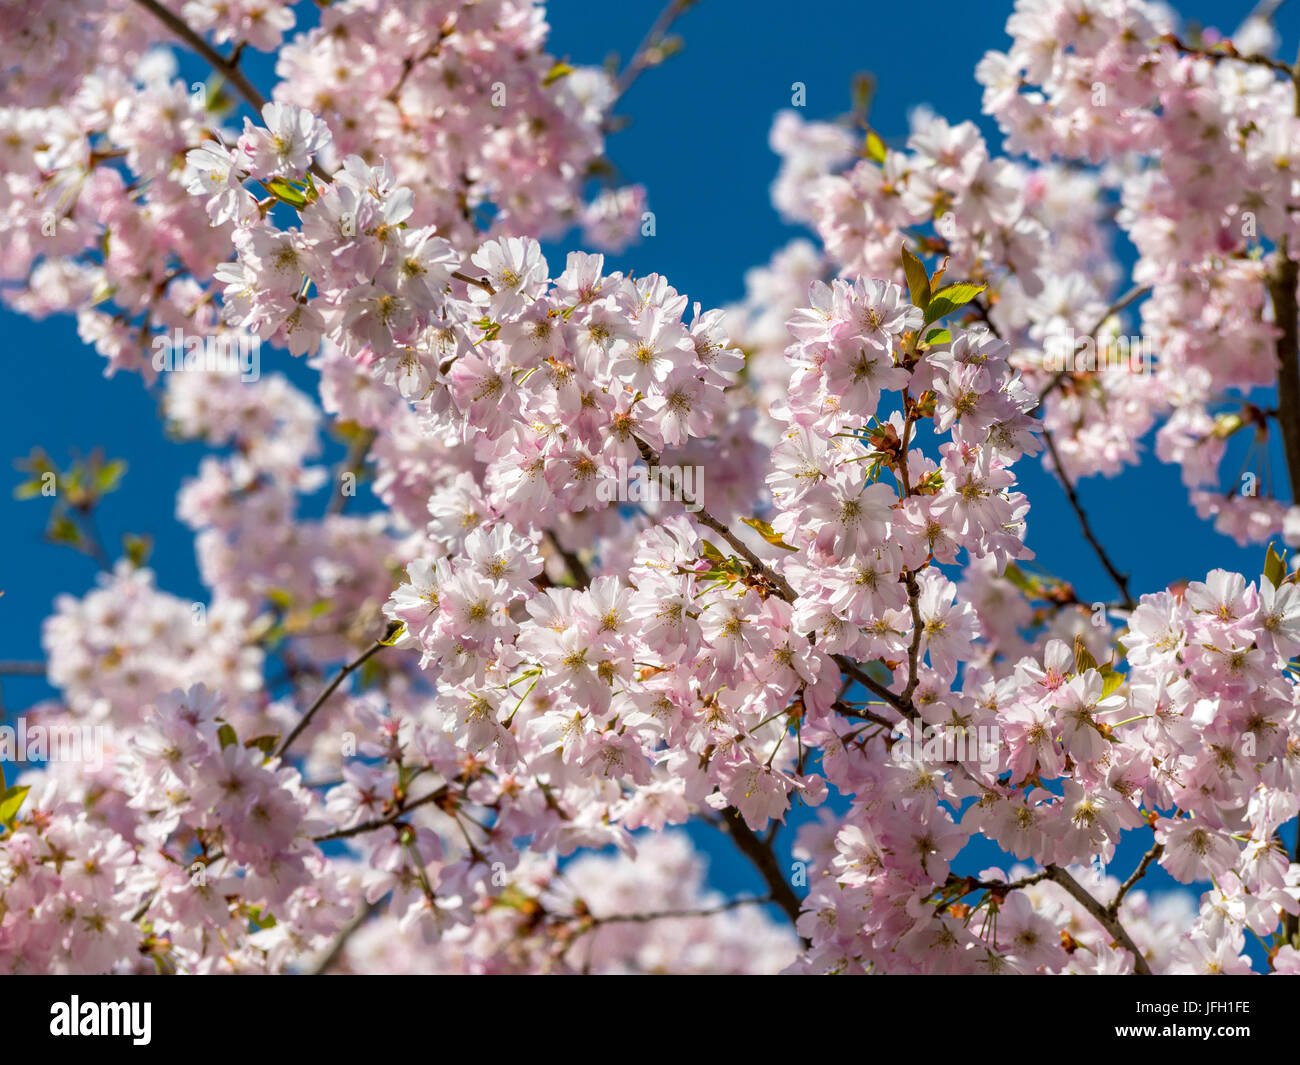 Cherry tree in full blossom, Munich, Germany, Europe Stock Photo